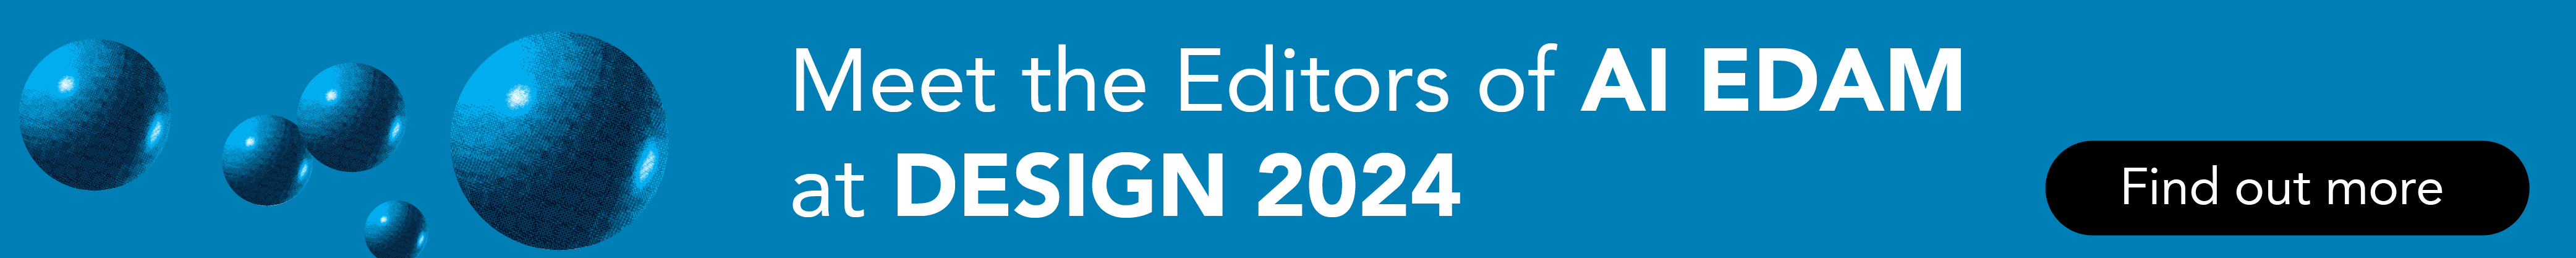 AIE banner meet the editors at Design 2024